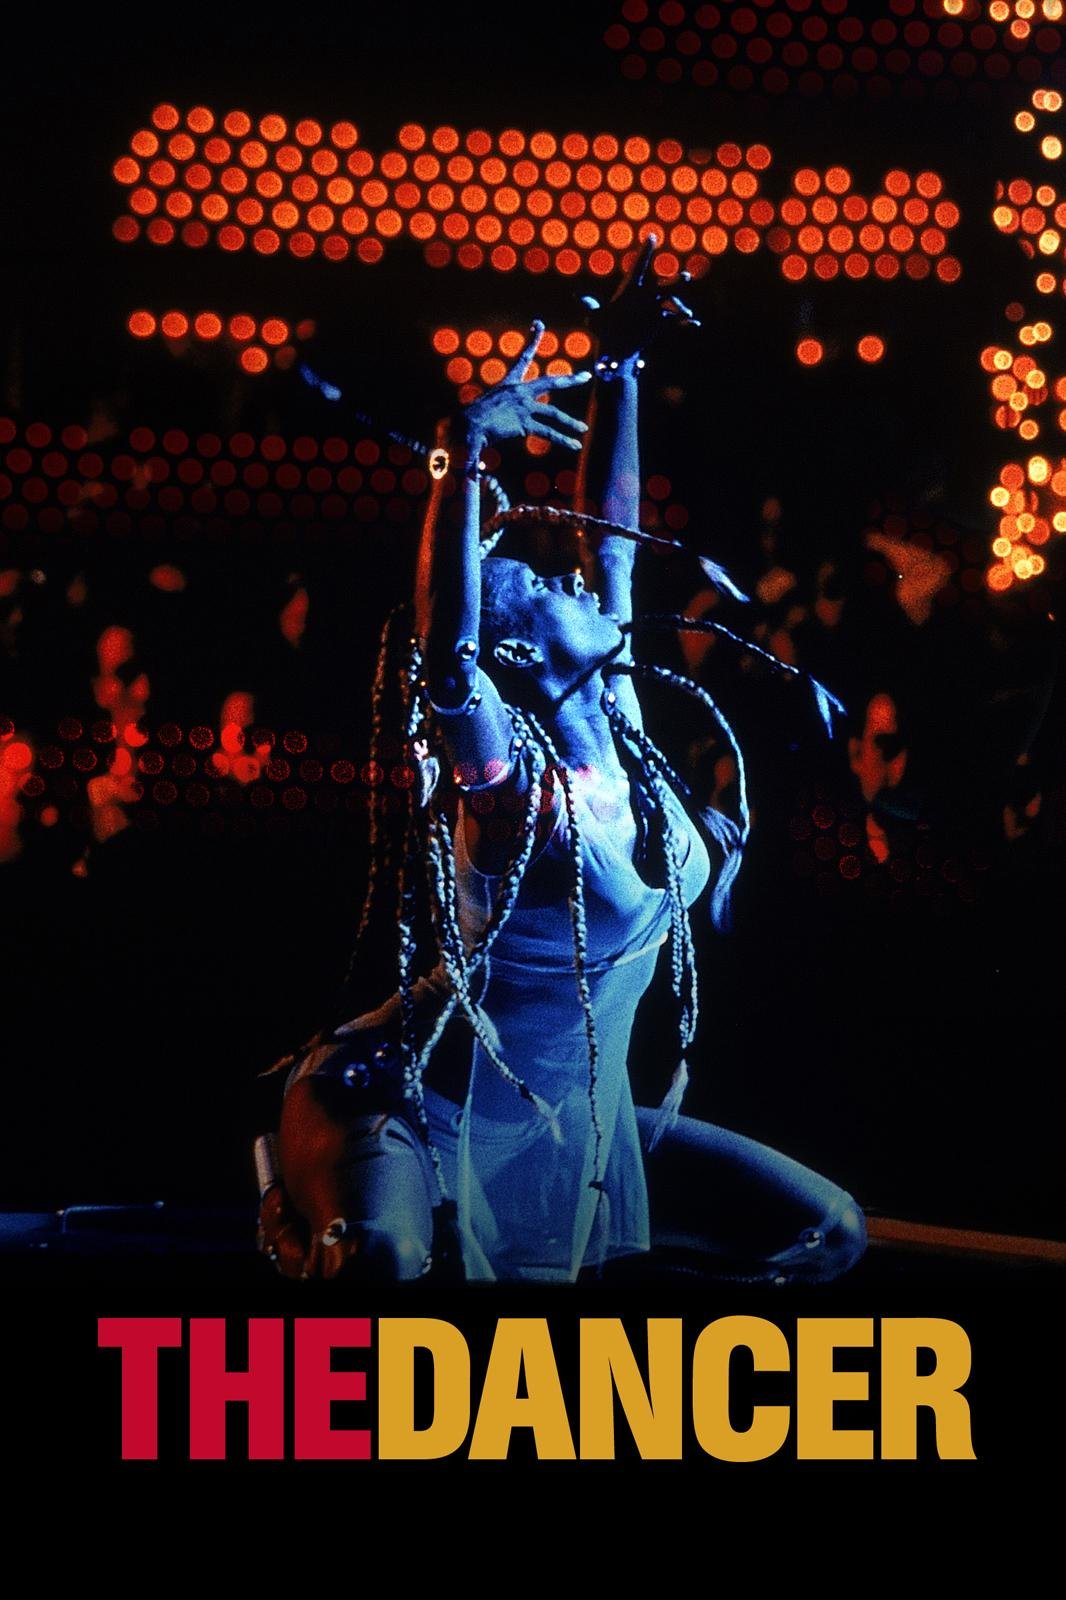 The Dancer (2000)